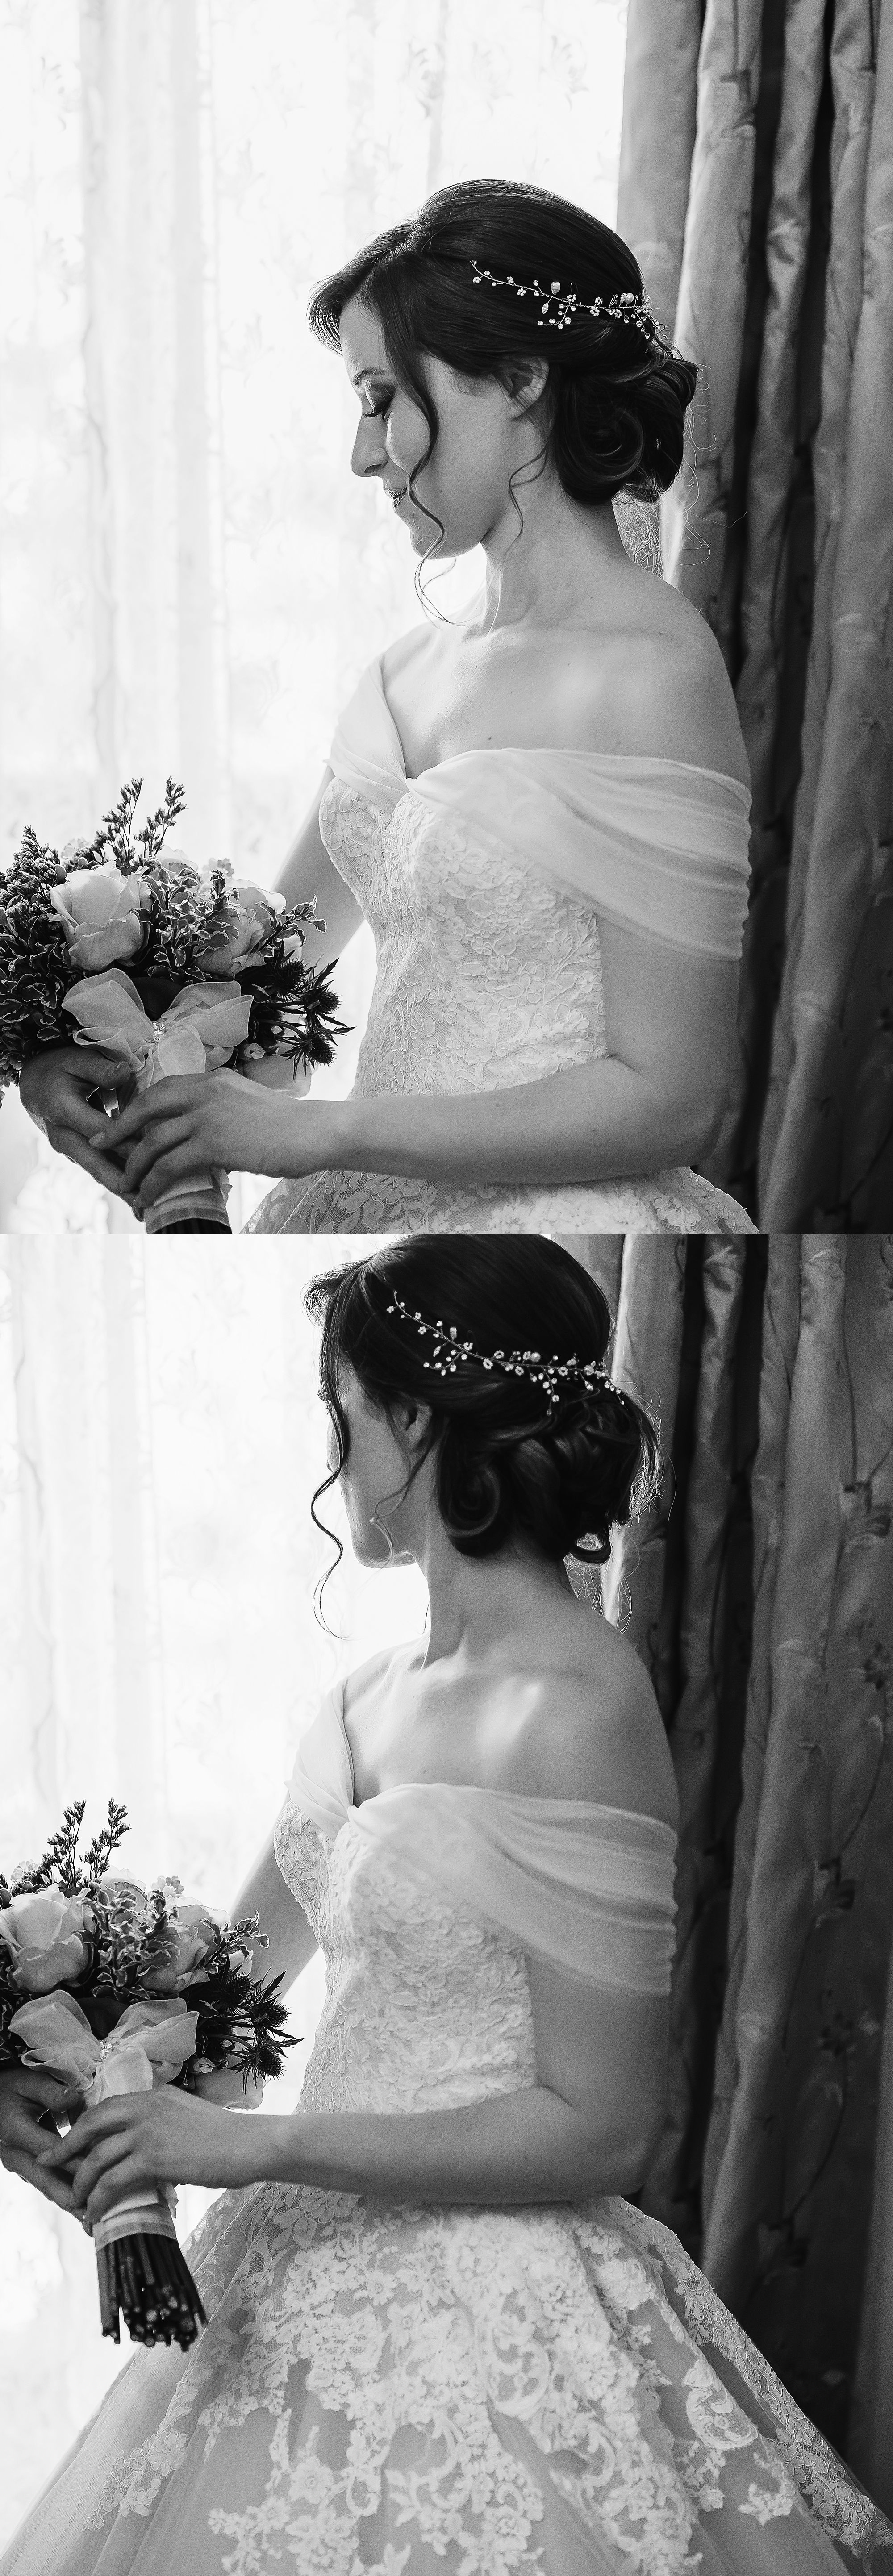 Lorraine & Cliff - The Hilton - Wedding Photography Malta - Shane P. Watts